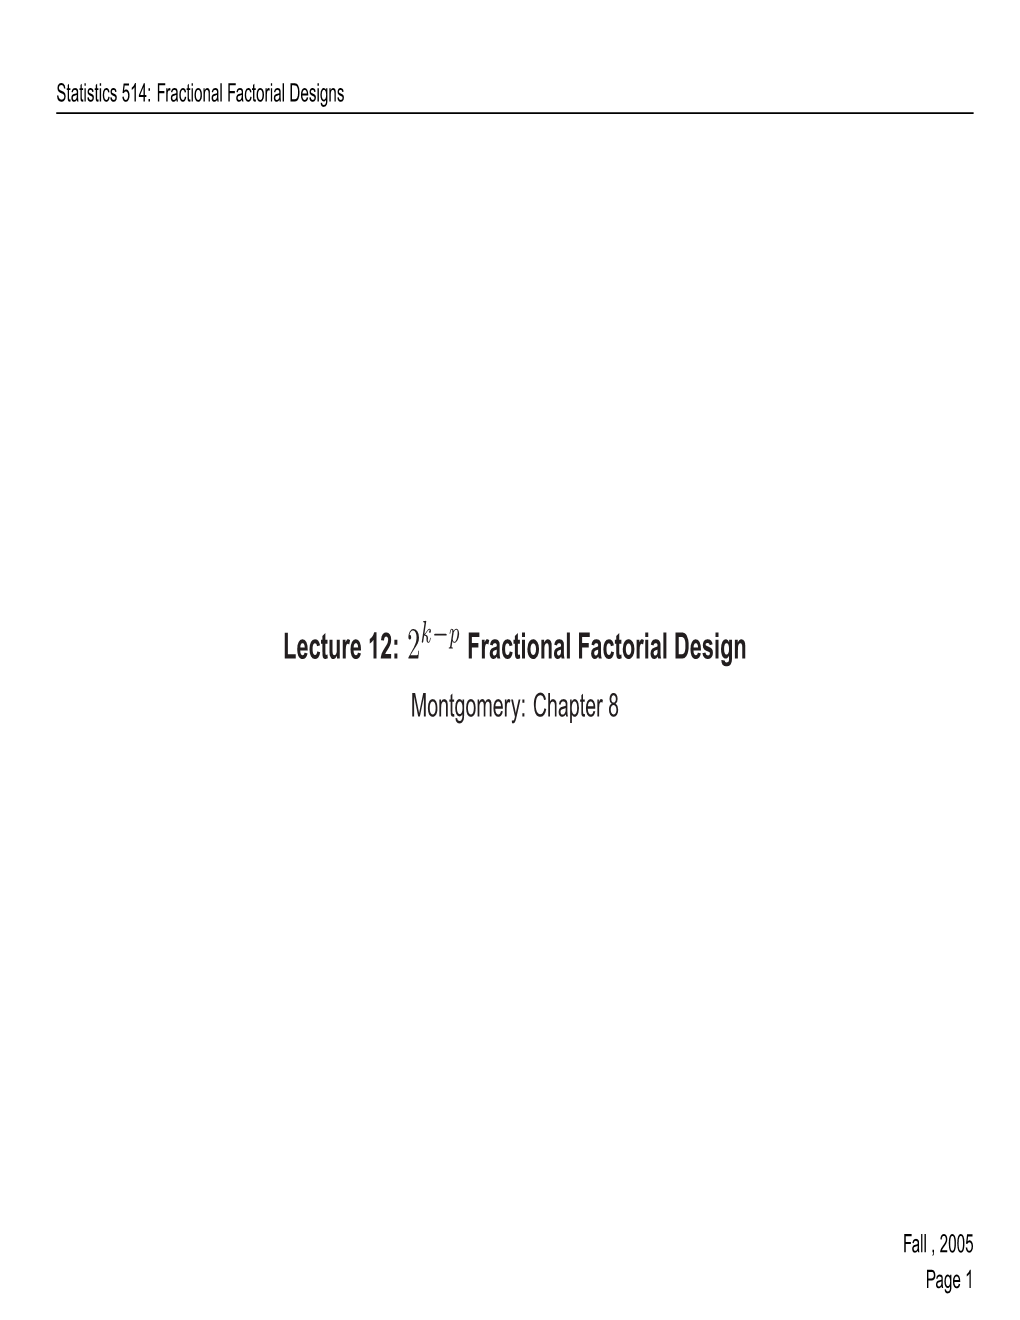 Fractional Factorial Designs